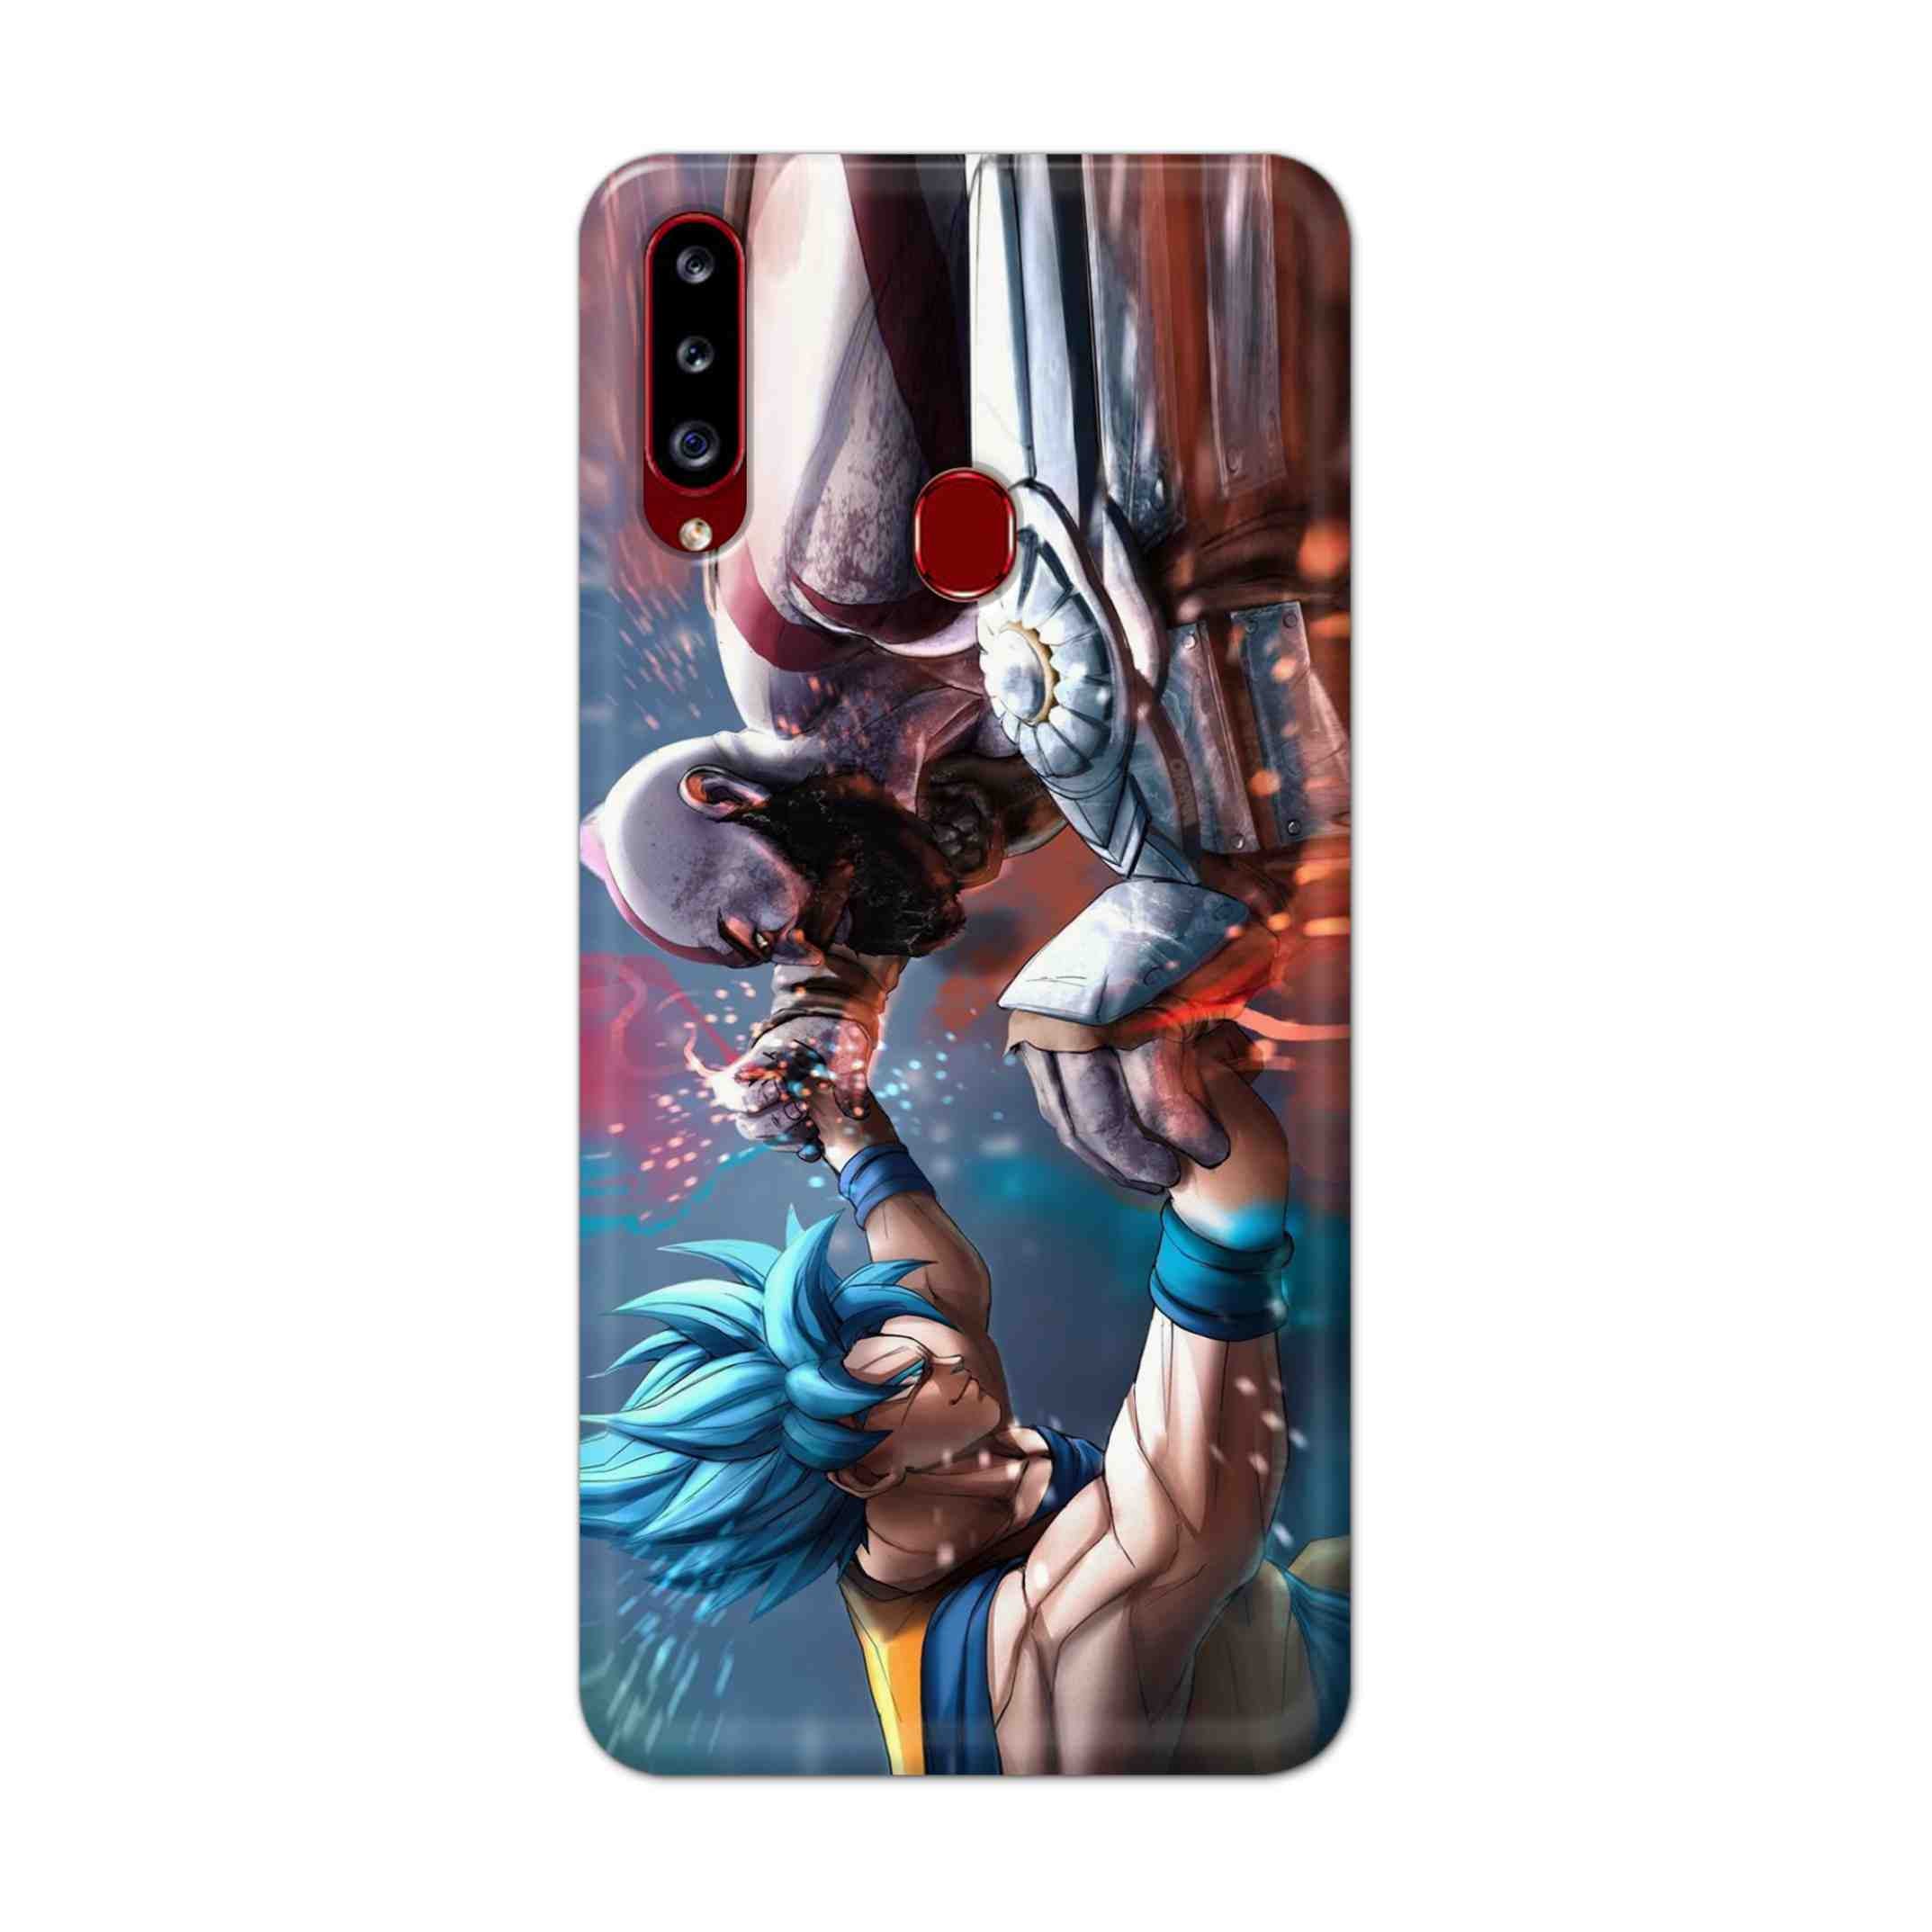 Buy Goku Vs Kratos Hard Back Mobile Phone Case Cover For Samsung A20s Online